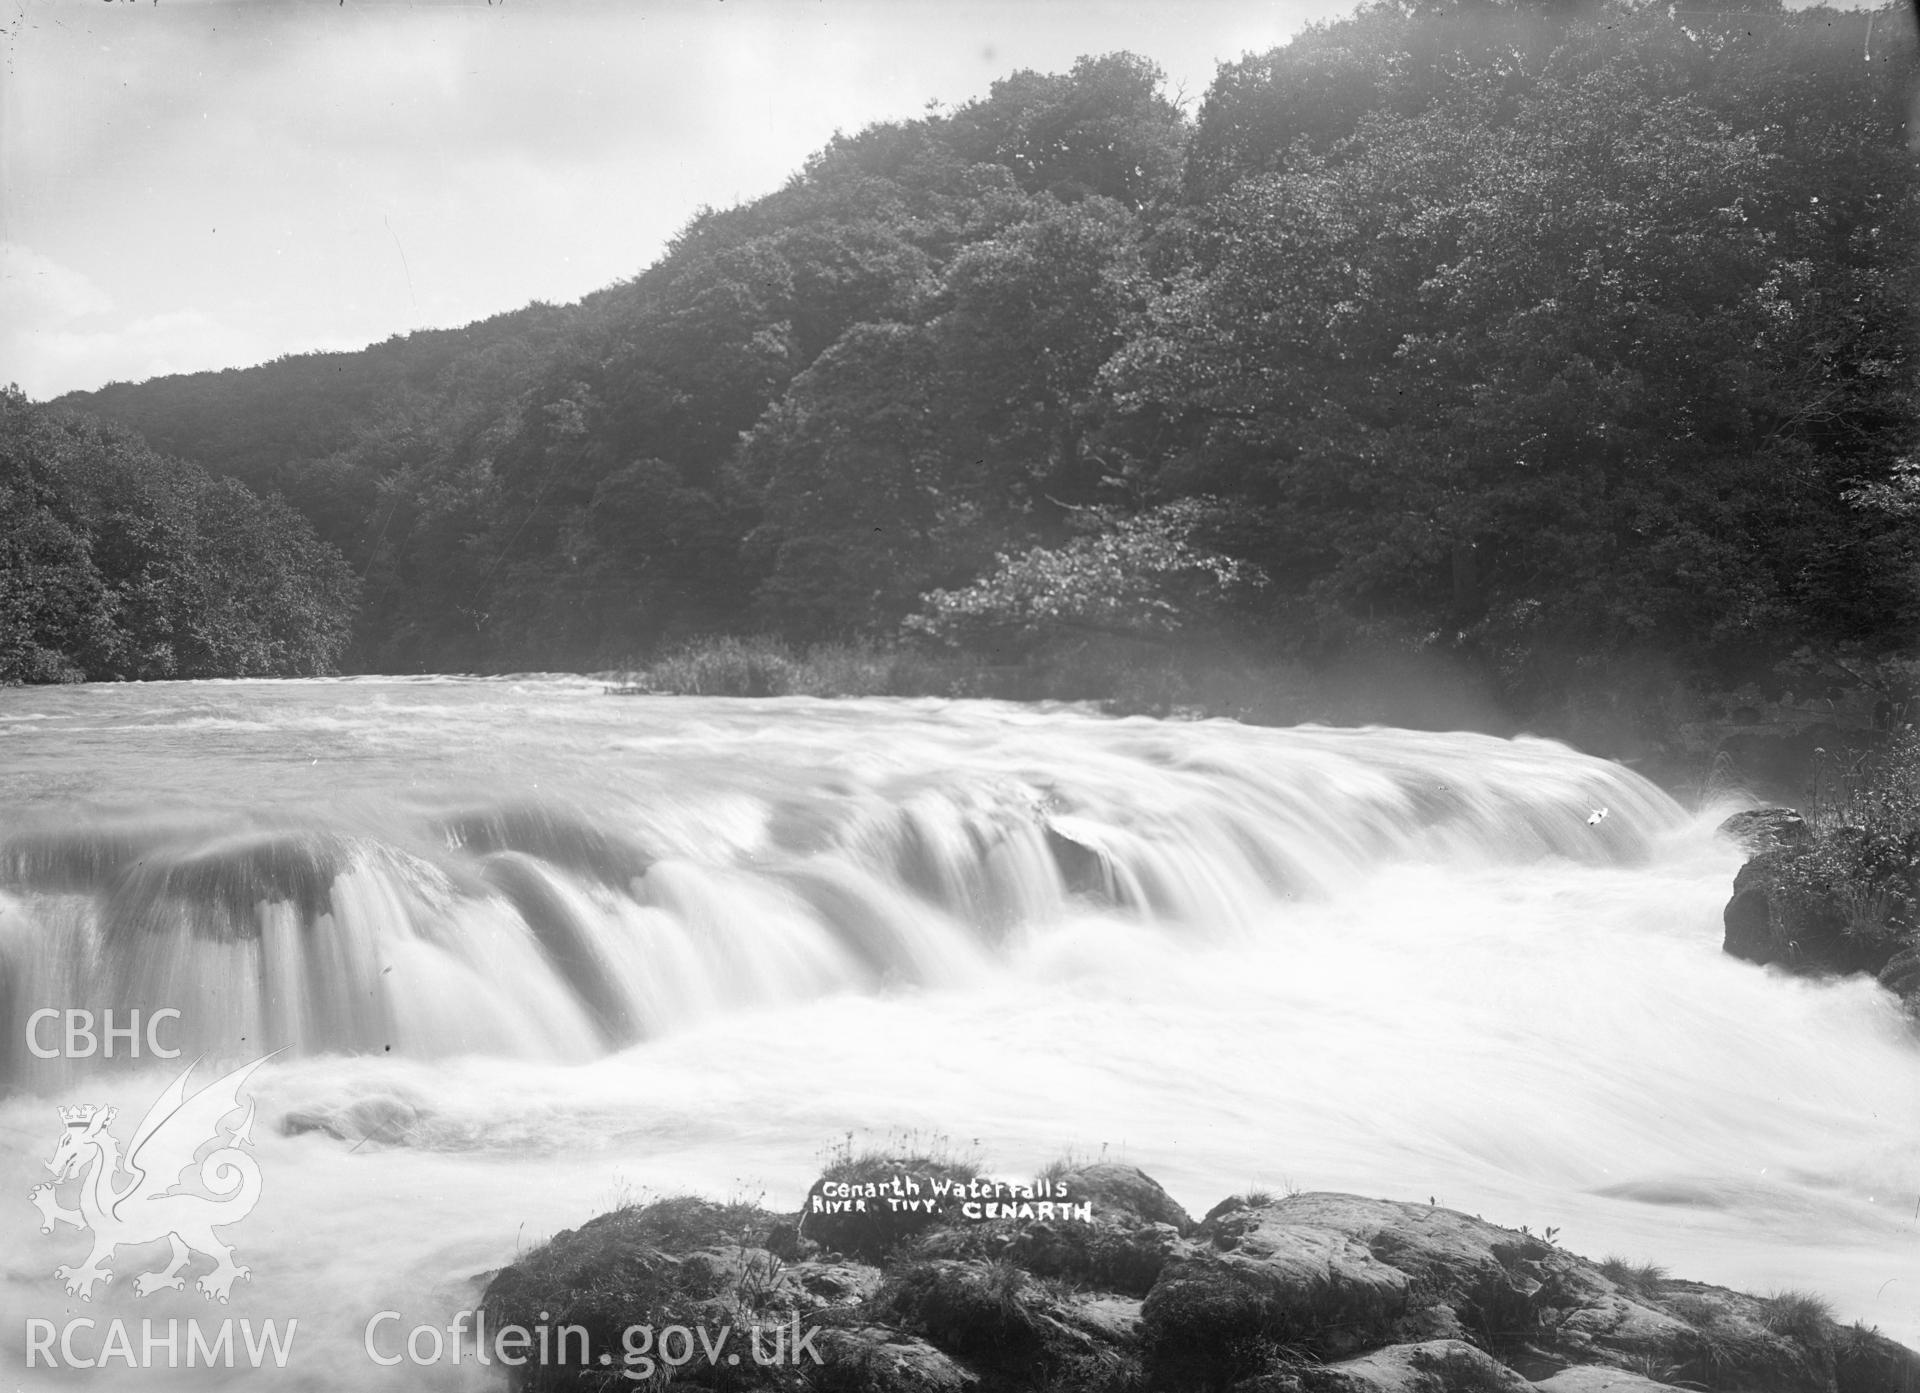 Black and white glass negative showing "Cenarth Waterfalls, River Tivy, Cenarth".